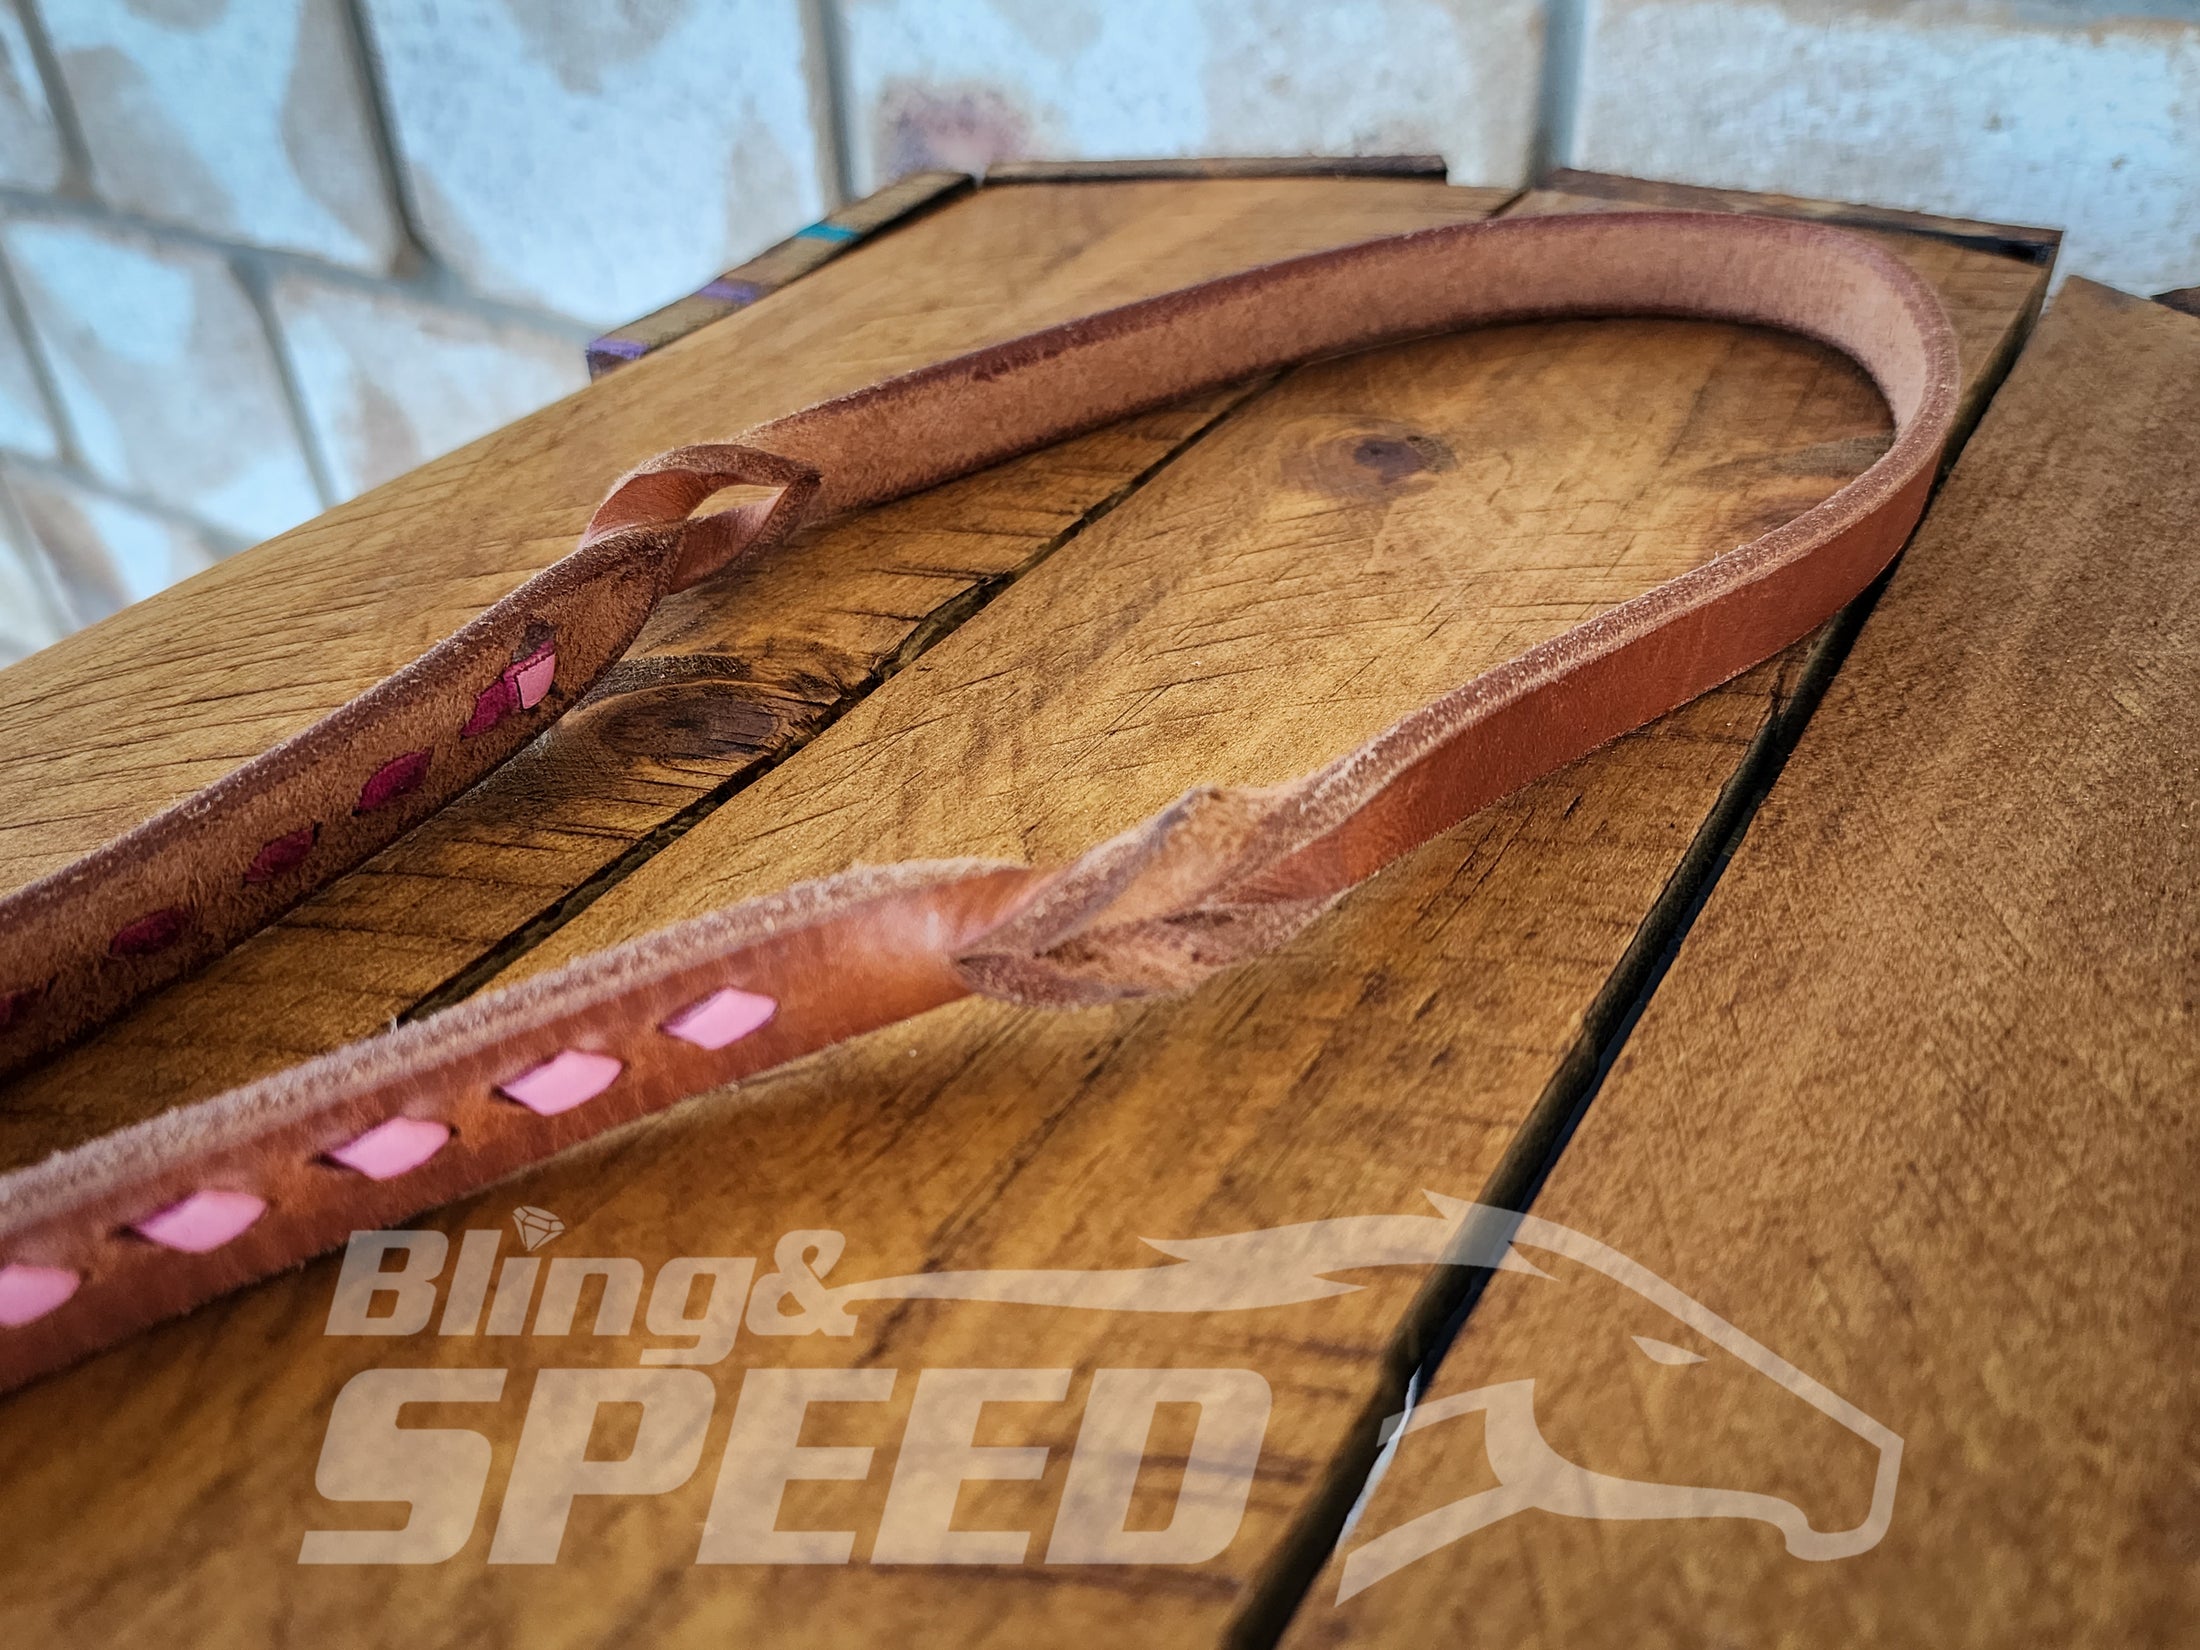 Bling & Speed Twisted Bloodknot Buckstitched Barrel Reins - Pink (7977762980078)